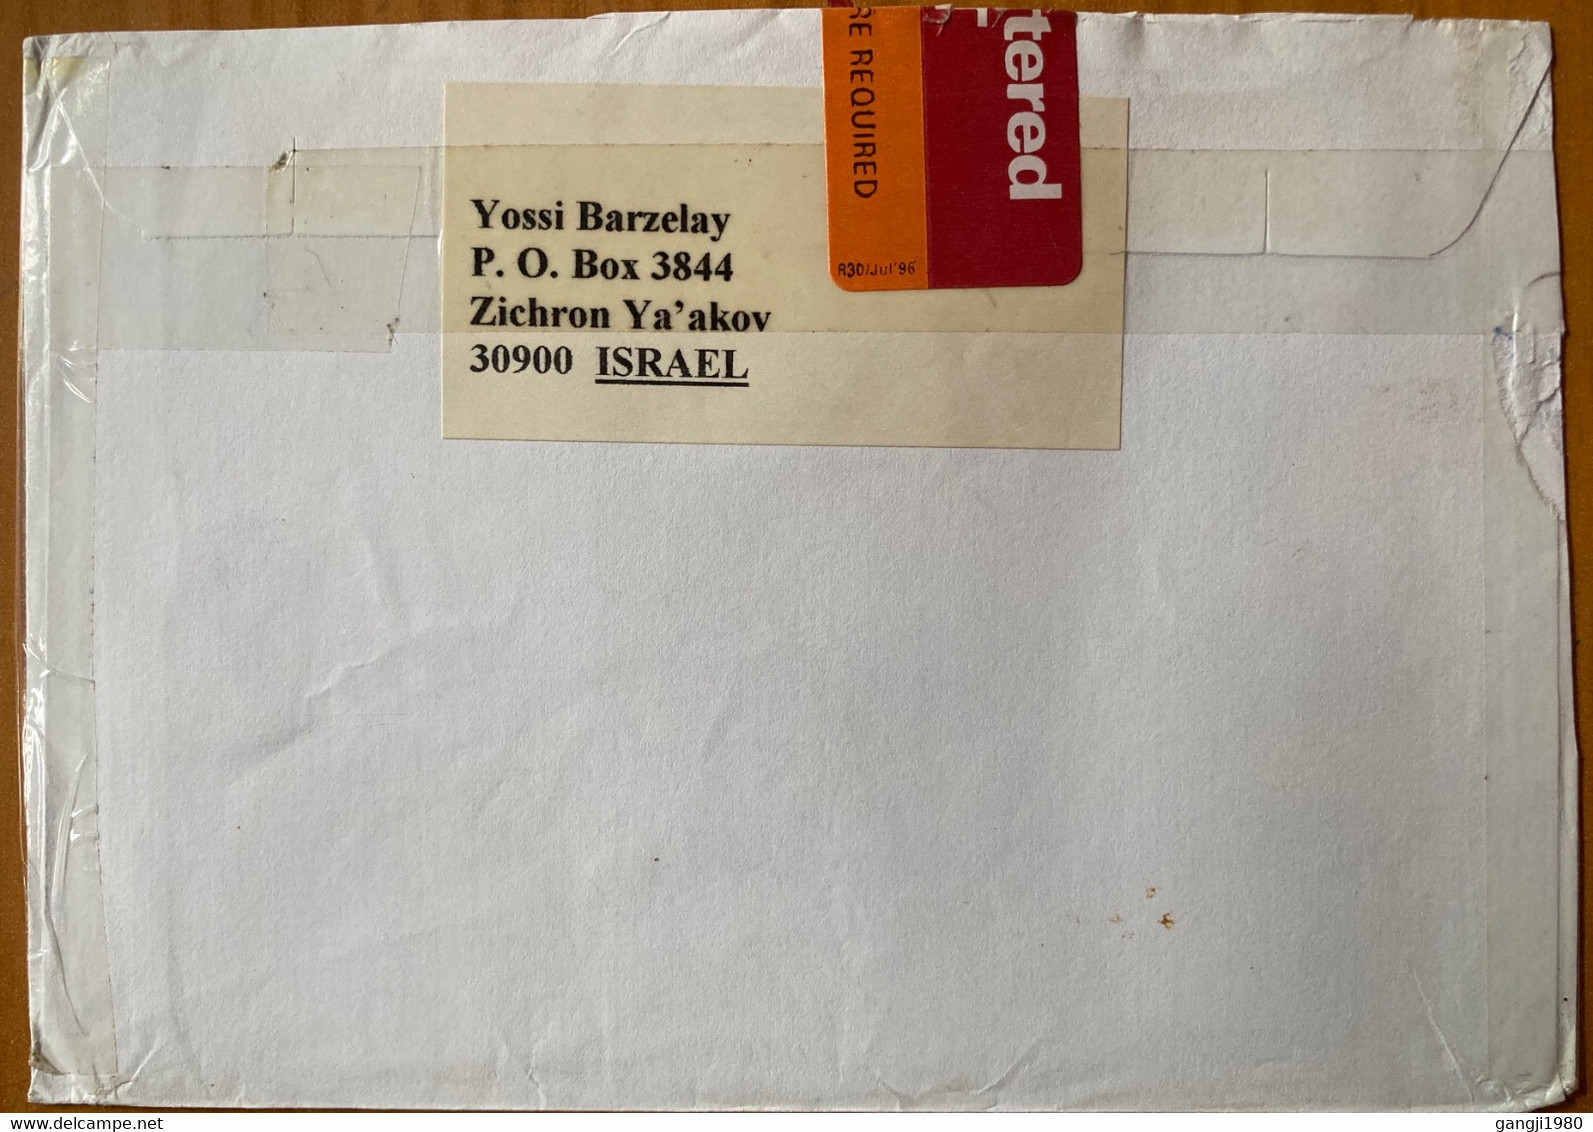 ISRAEL 2003, ATM MACHINE VENDING LABEL ,VIGNETTE REGISTERED,COVER TO AUSTRALIA, ZIKHRON VASKOV CITY CANCELLATION - Cartas & Documentos